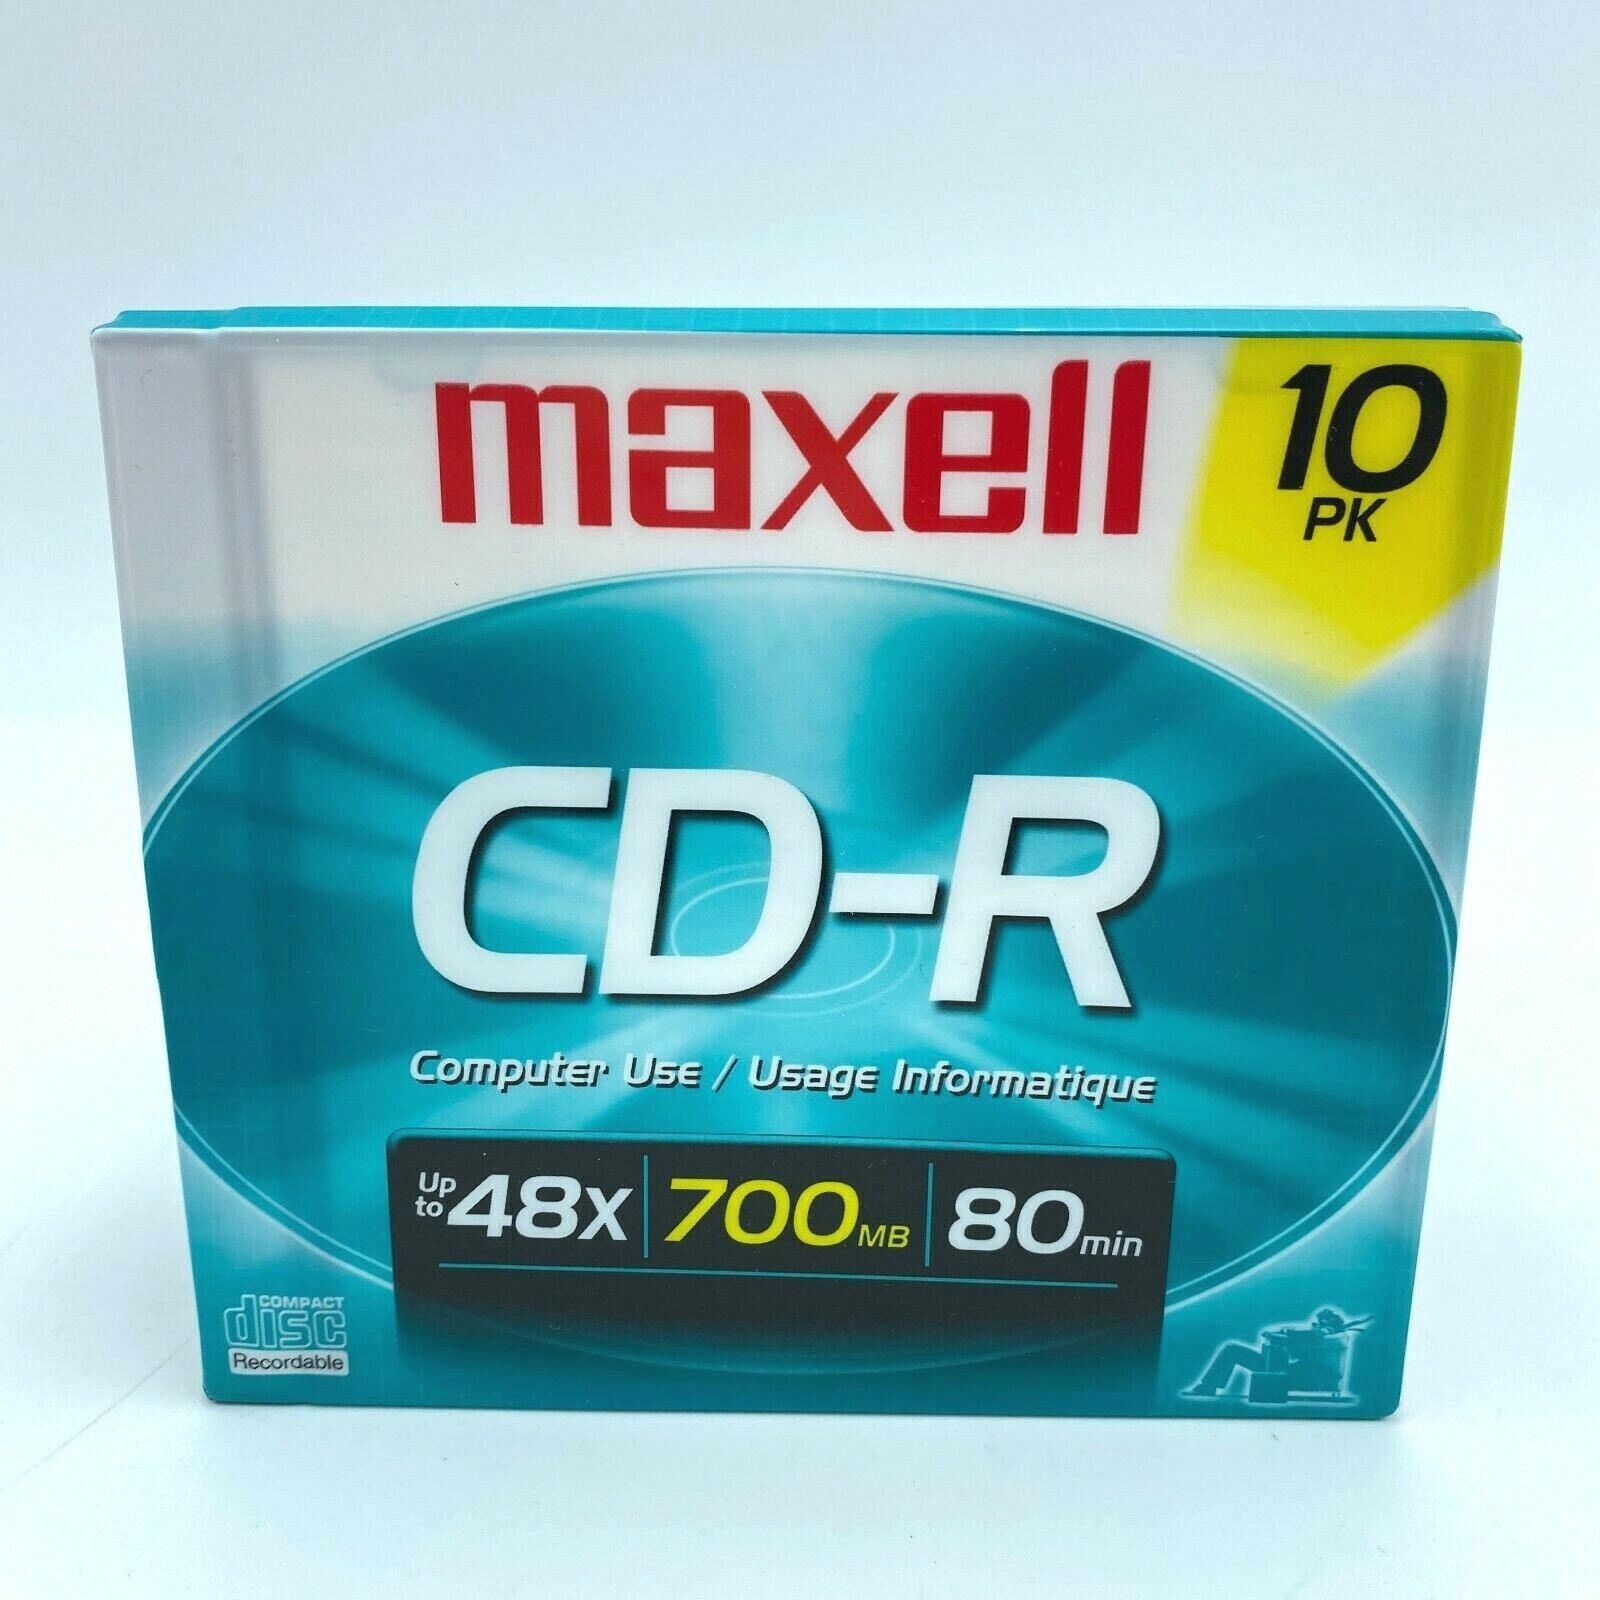 Maxell CD-R Blank Discs 10 pk. - 700mb/48x/80 min - SEALED